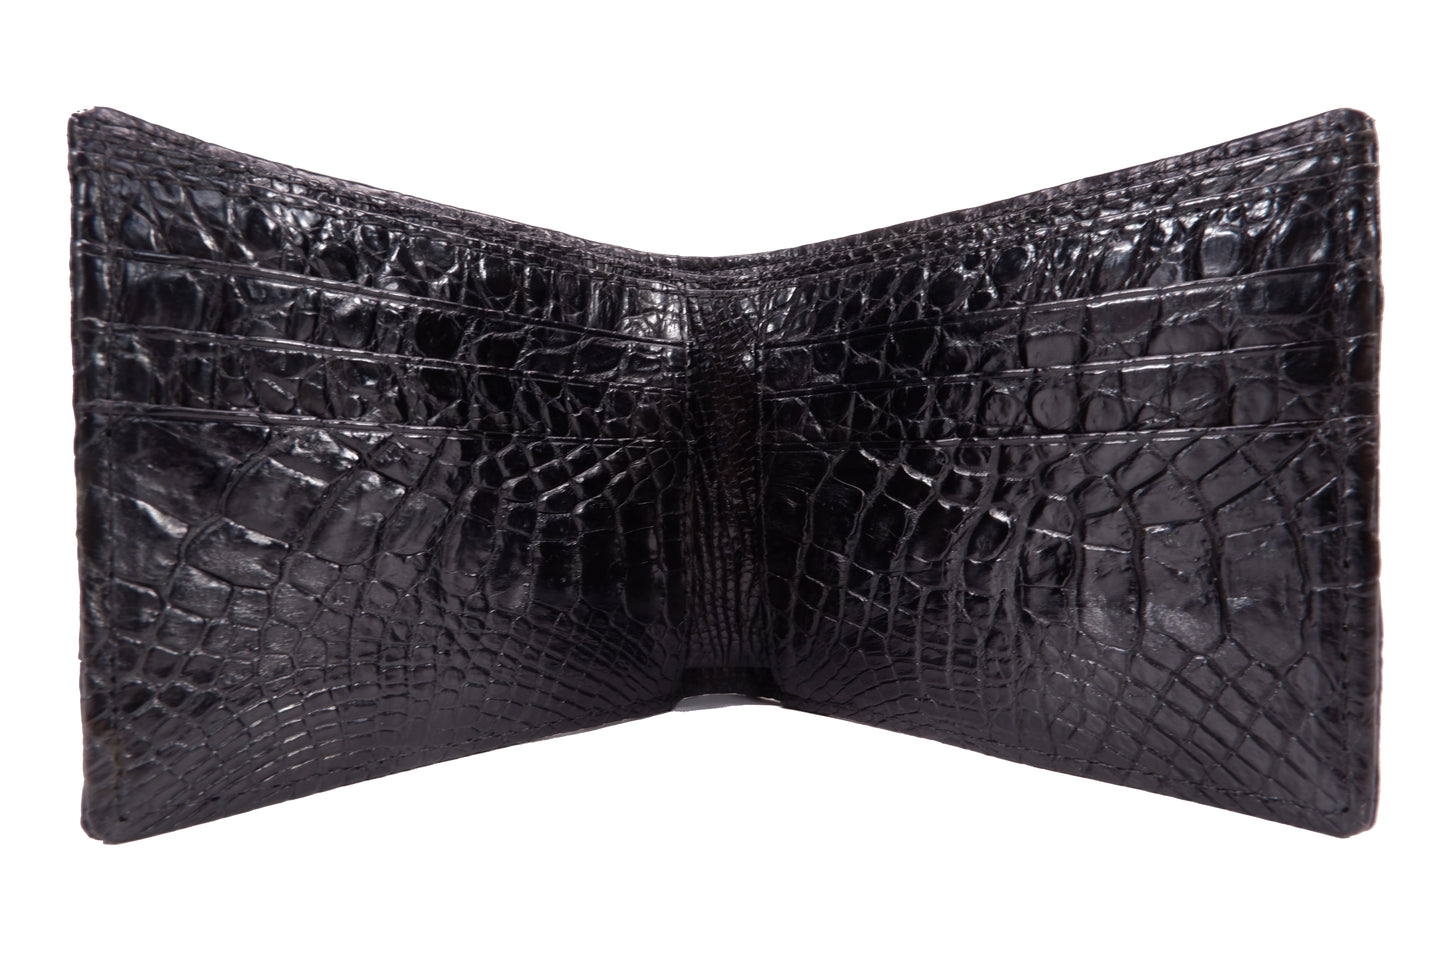 Genuine Crocodile Tail Skin Leather Bifold Wallet with Crocodile Skin Interior